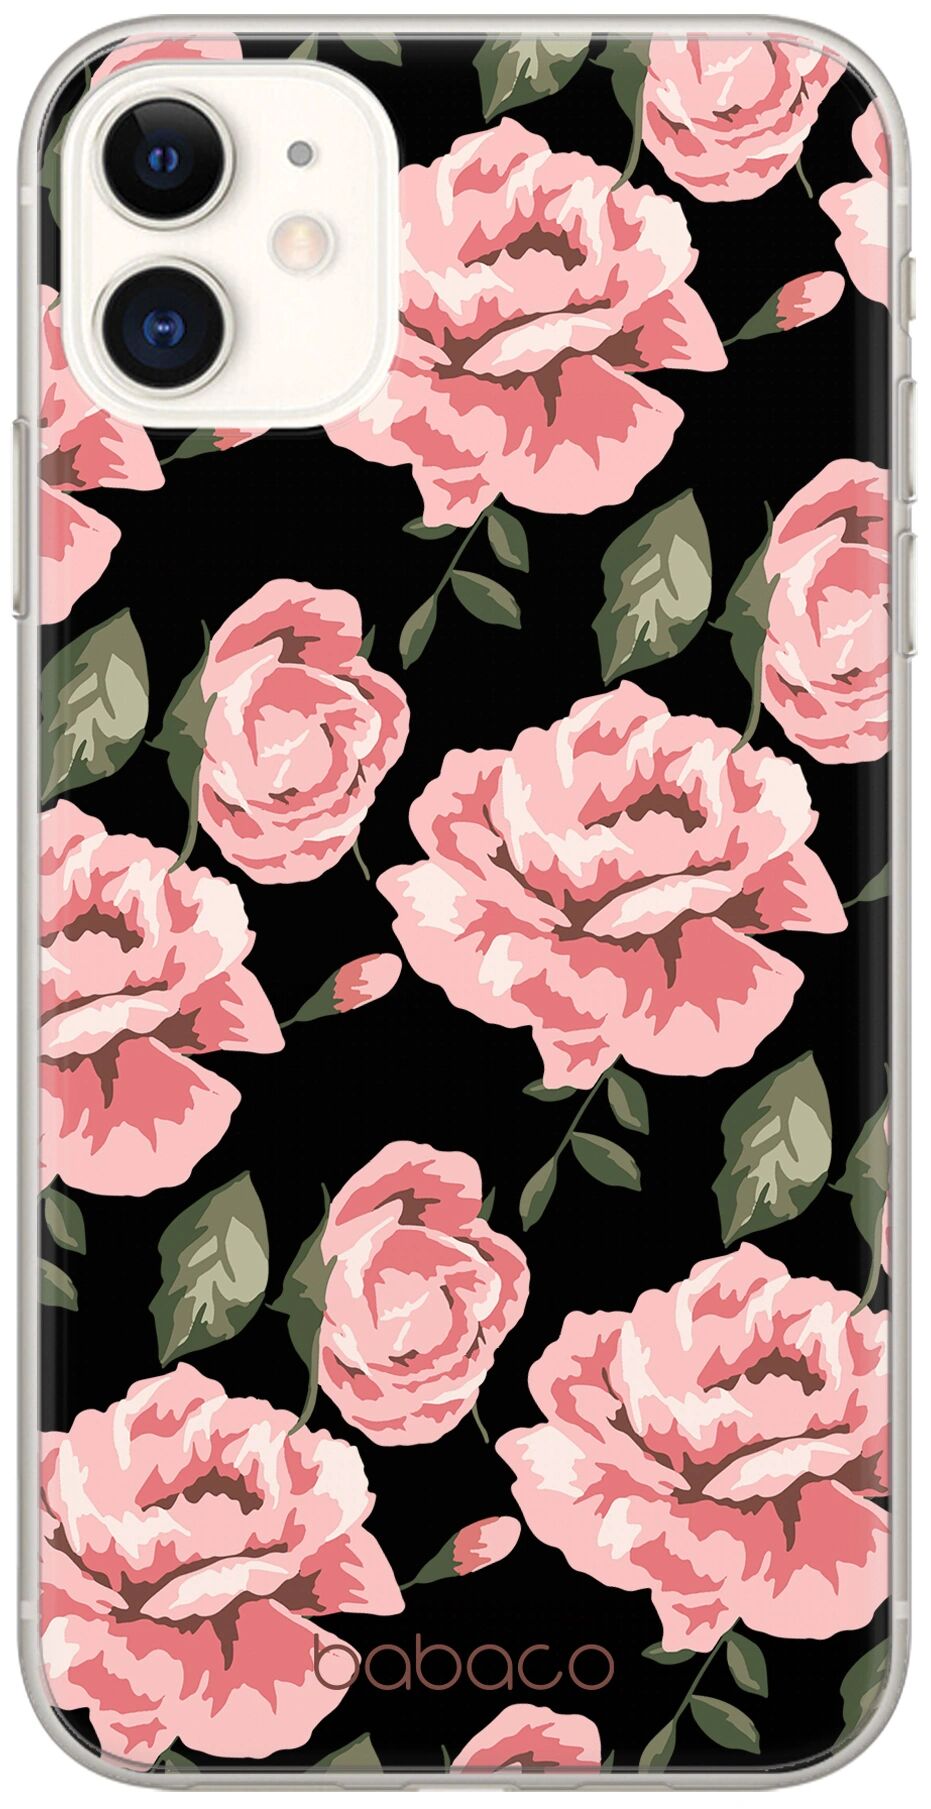 Babaco Ochranný kryt pro iPhone 6 / 6S - Babaco, Flowers 013 Black